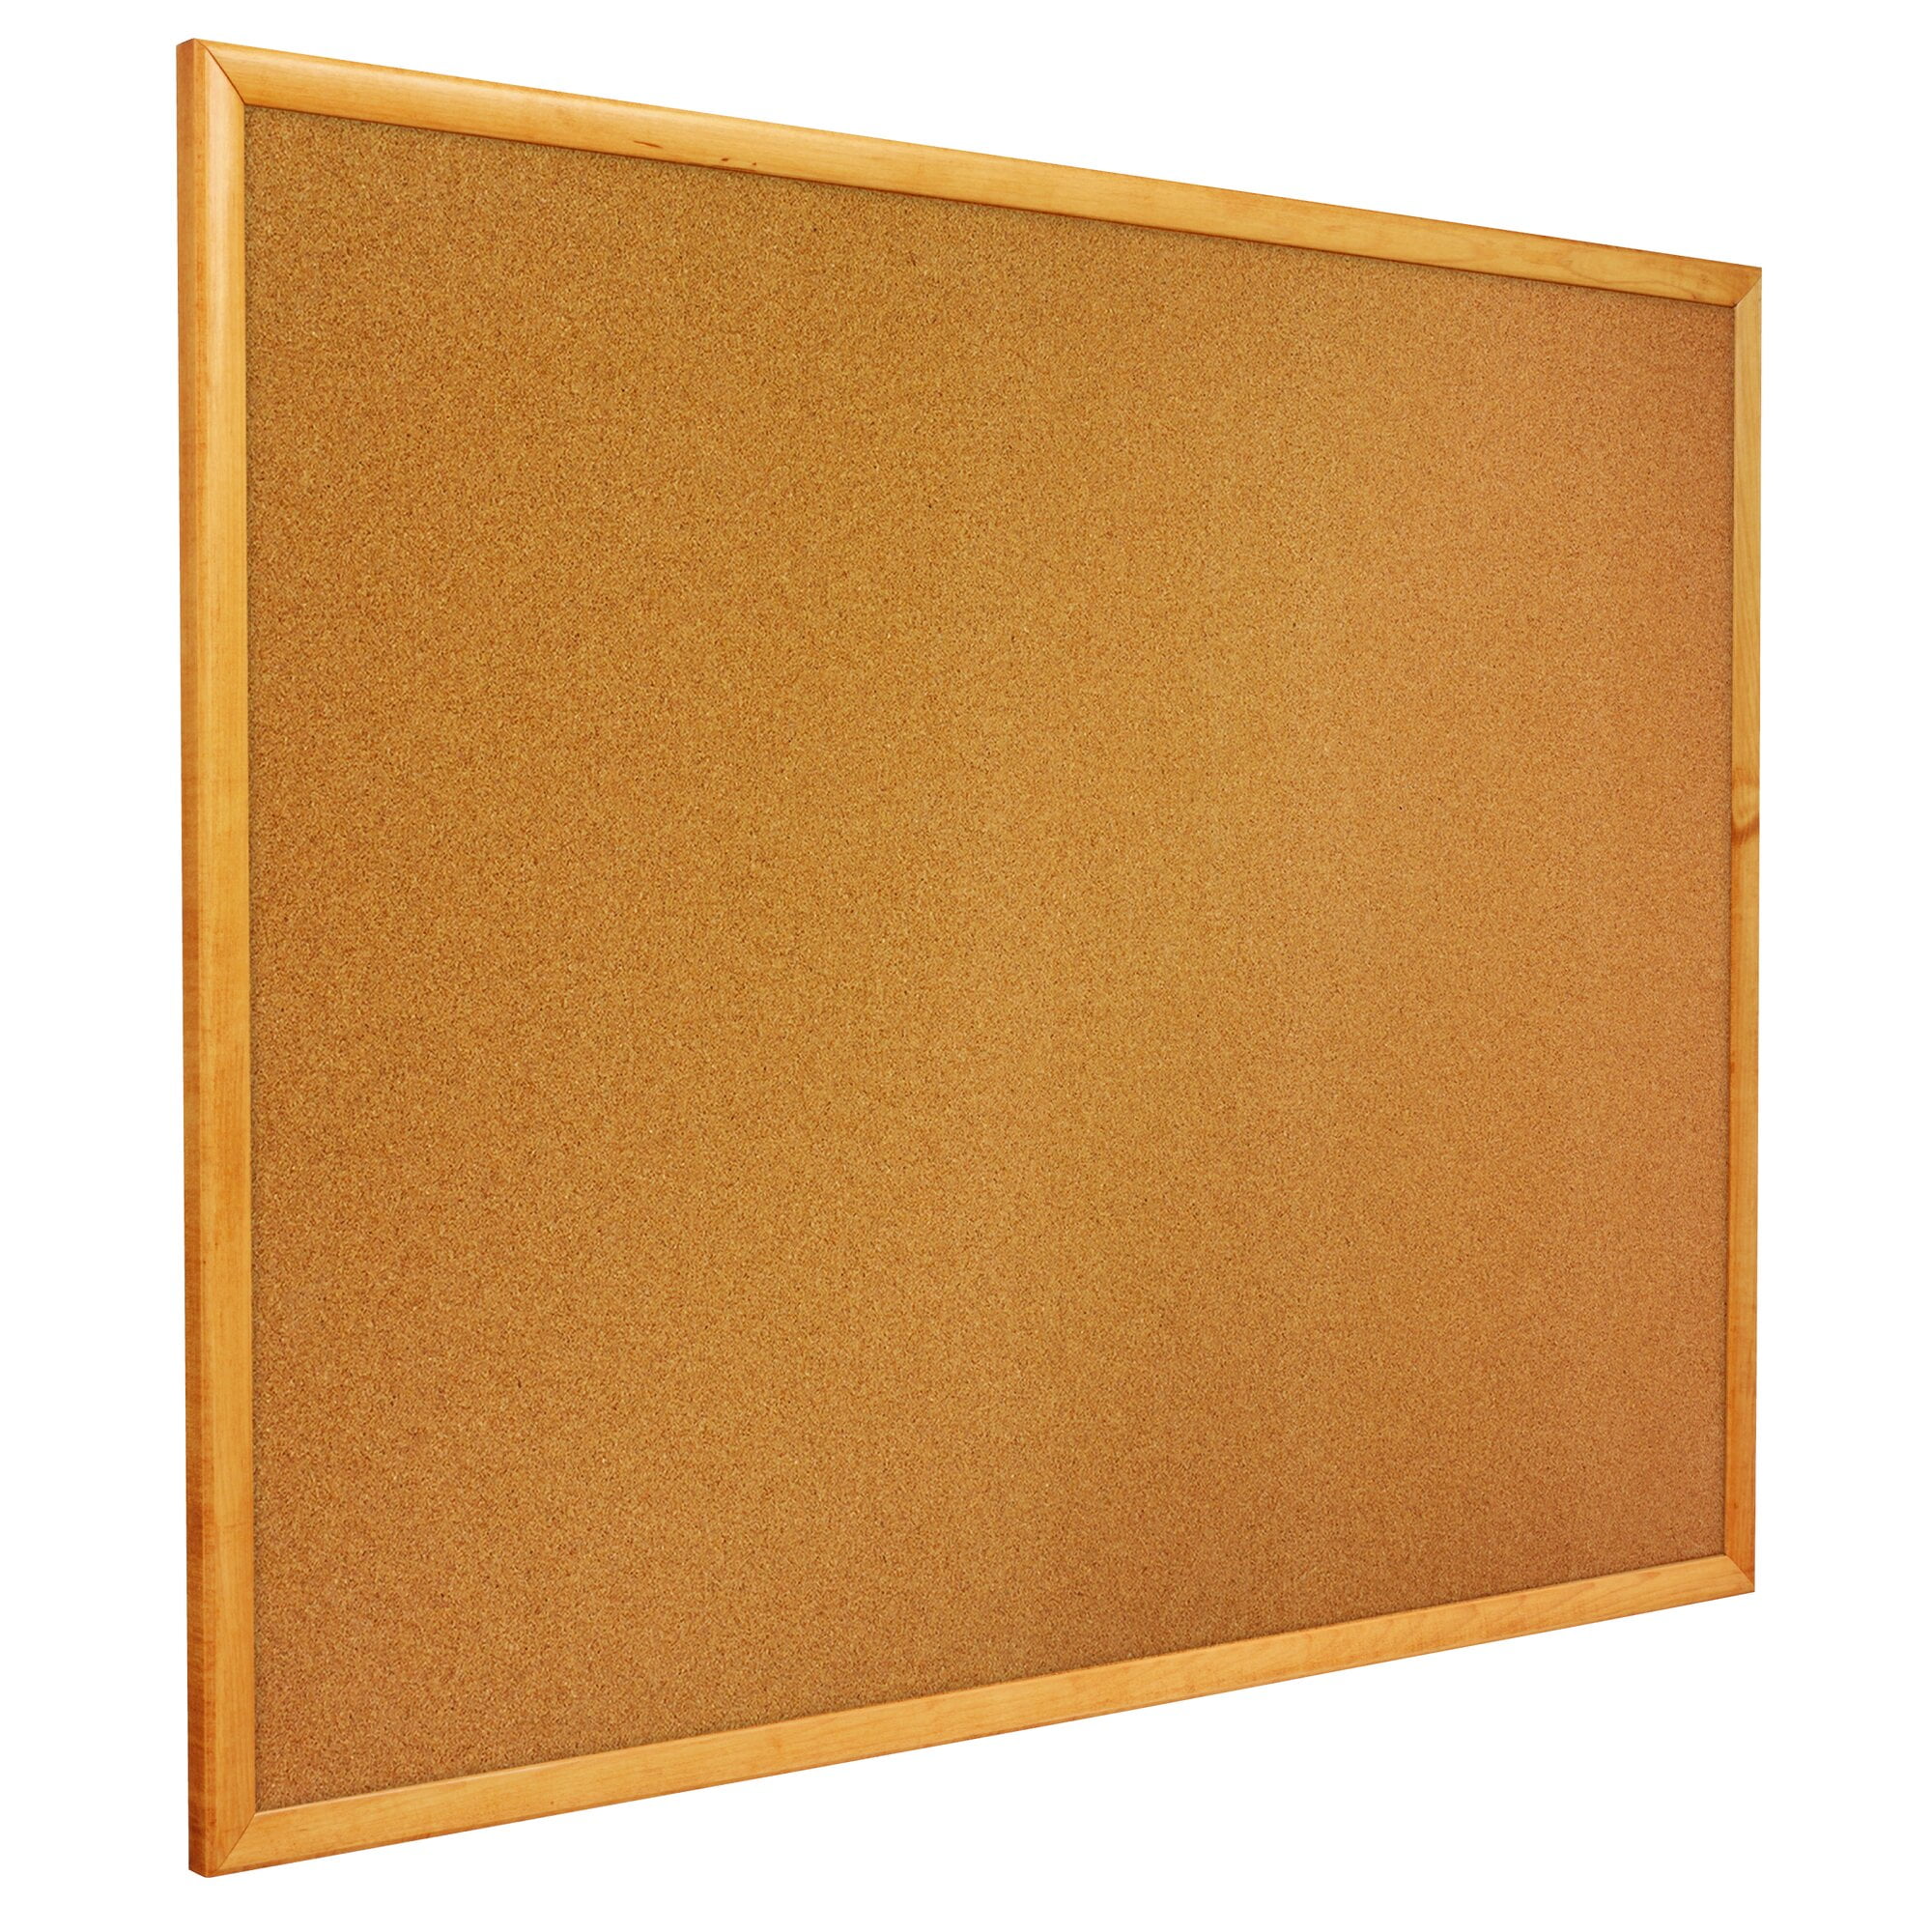 UNIVERSAL Cork Board with Oak Style Frame 48 x 36 Natural Oak-Finished Frame 